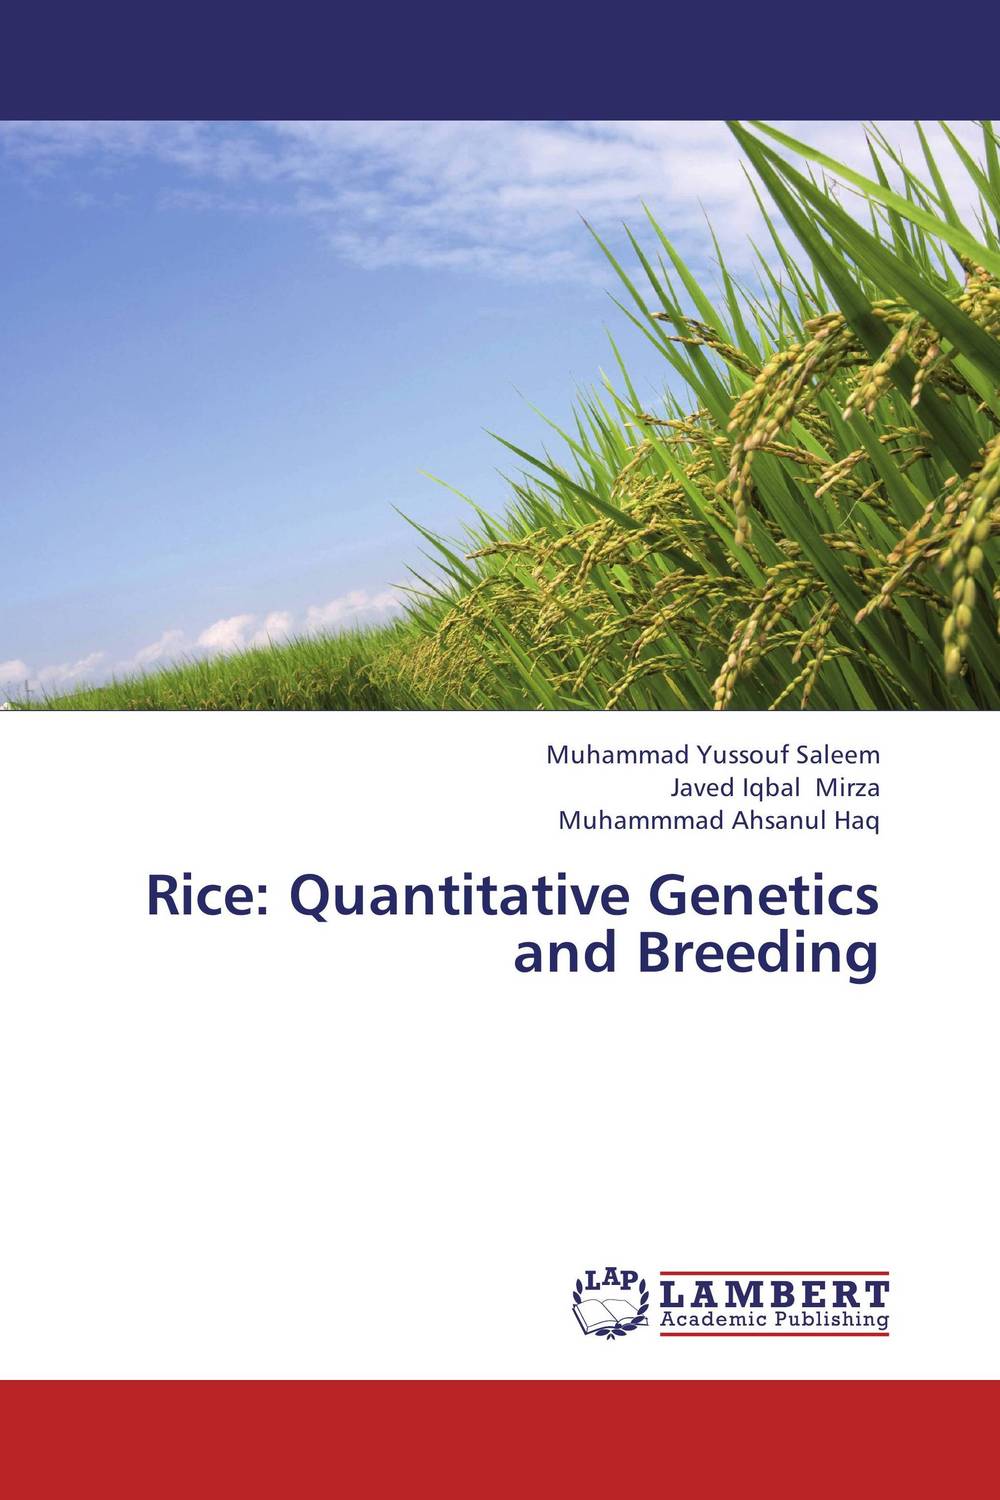 Rice: Quantitative Genetics and Breeding